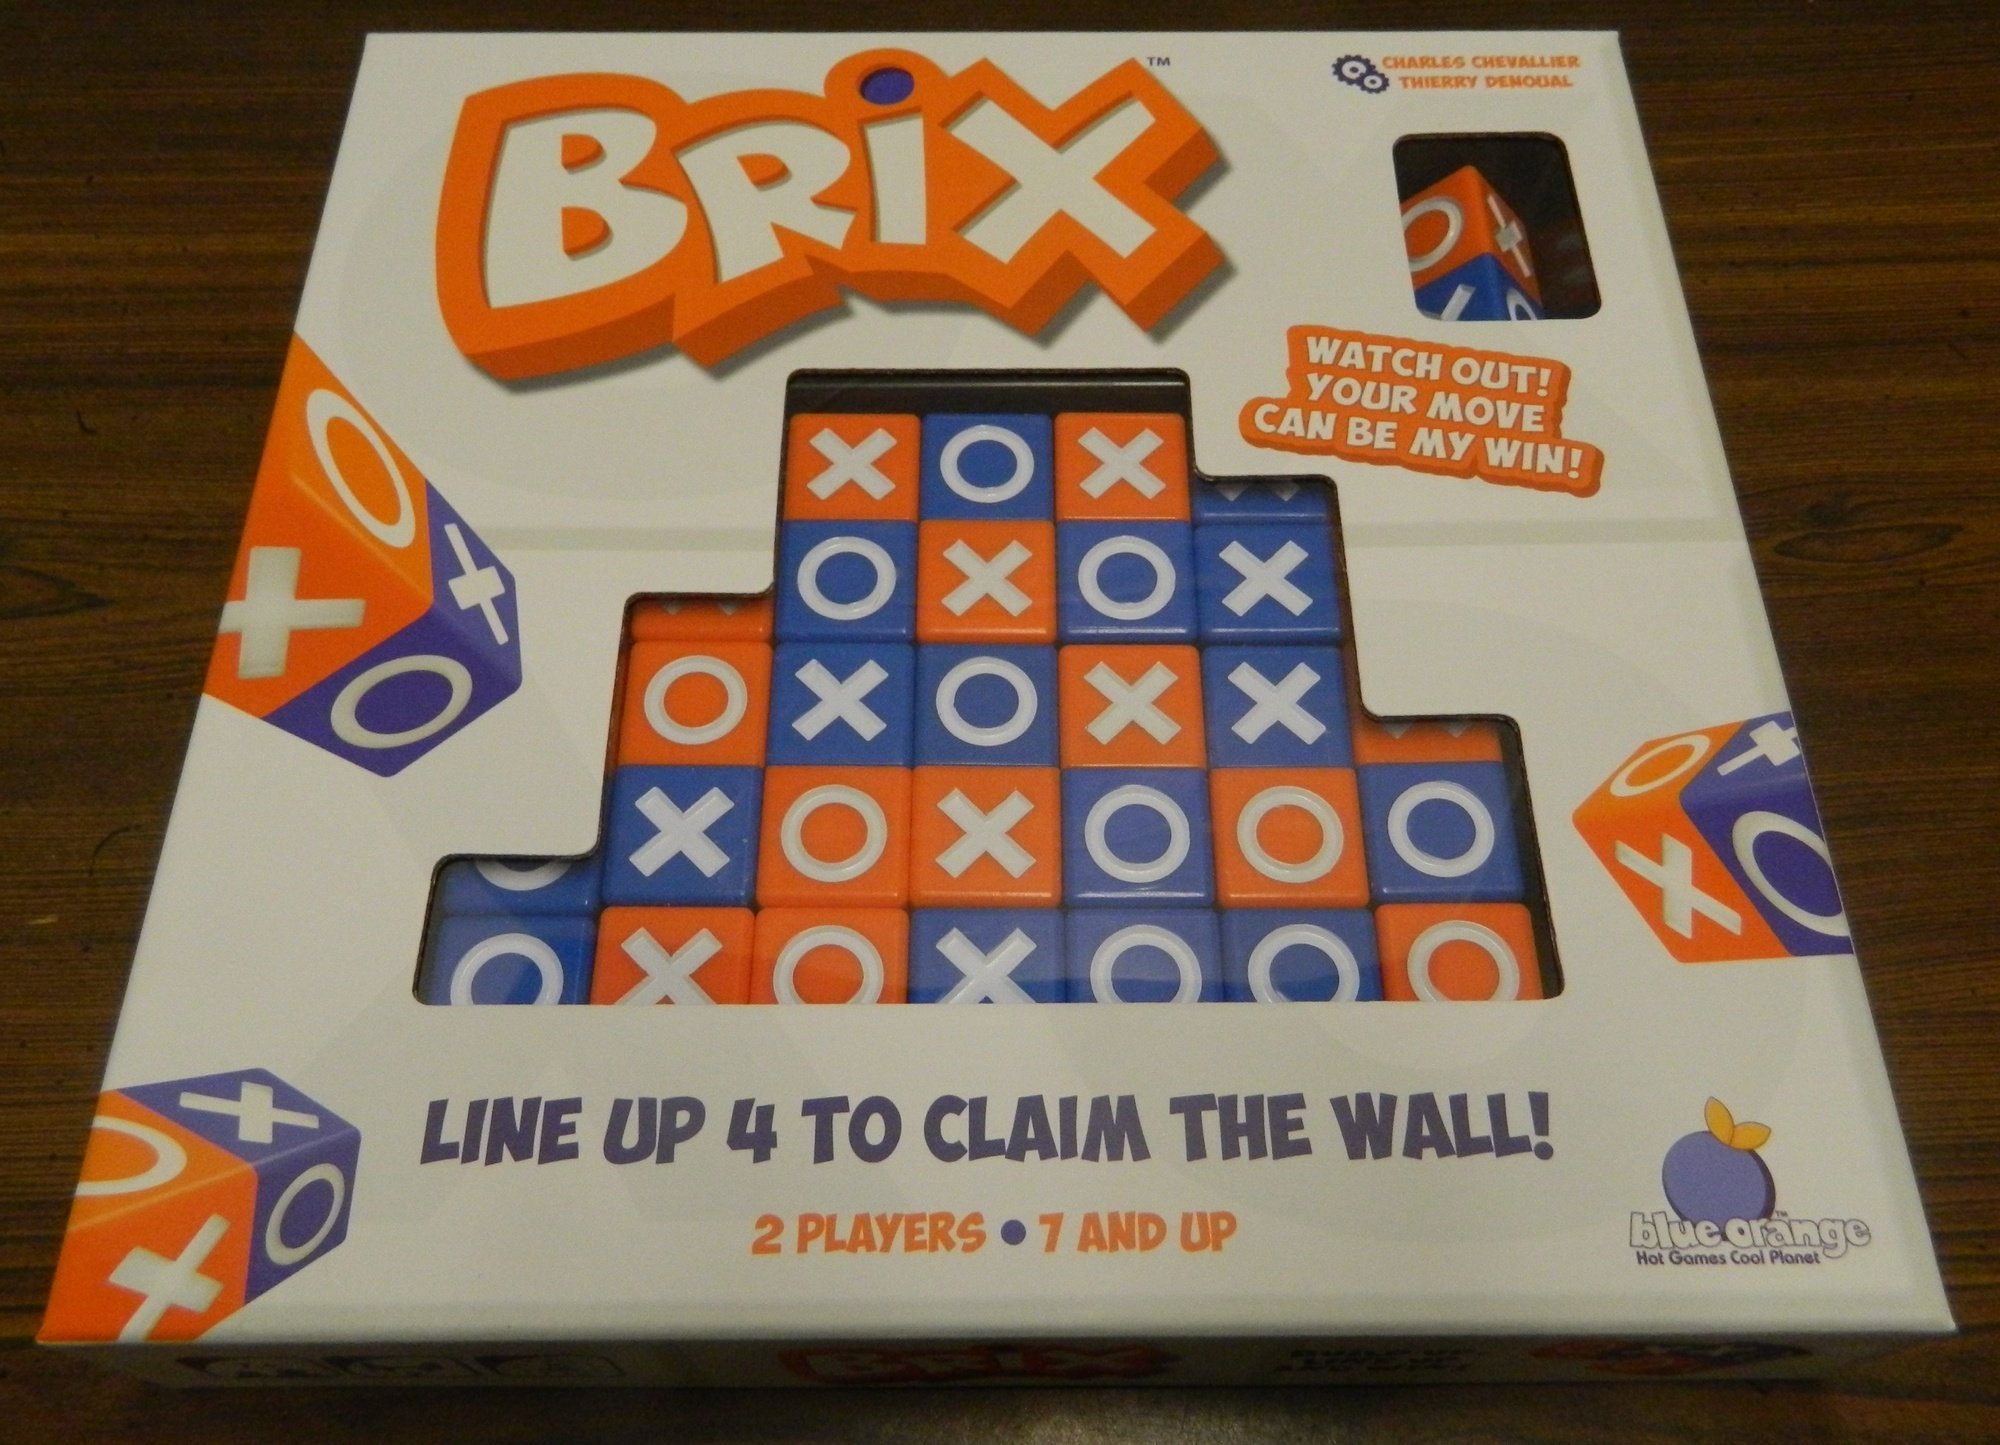 Brix Box